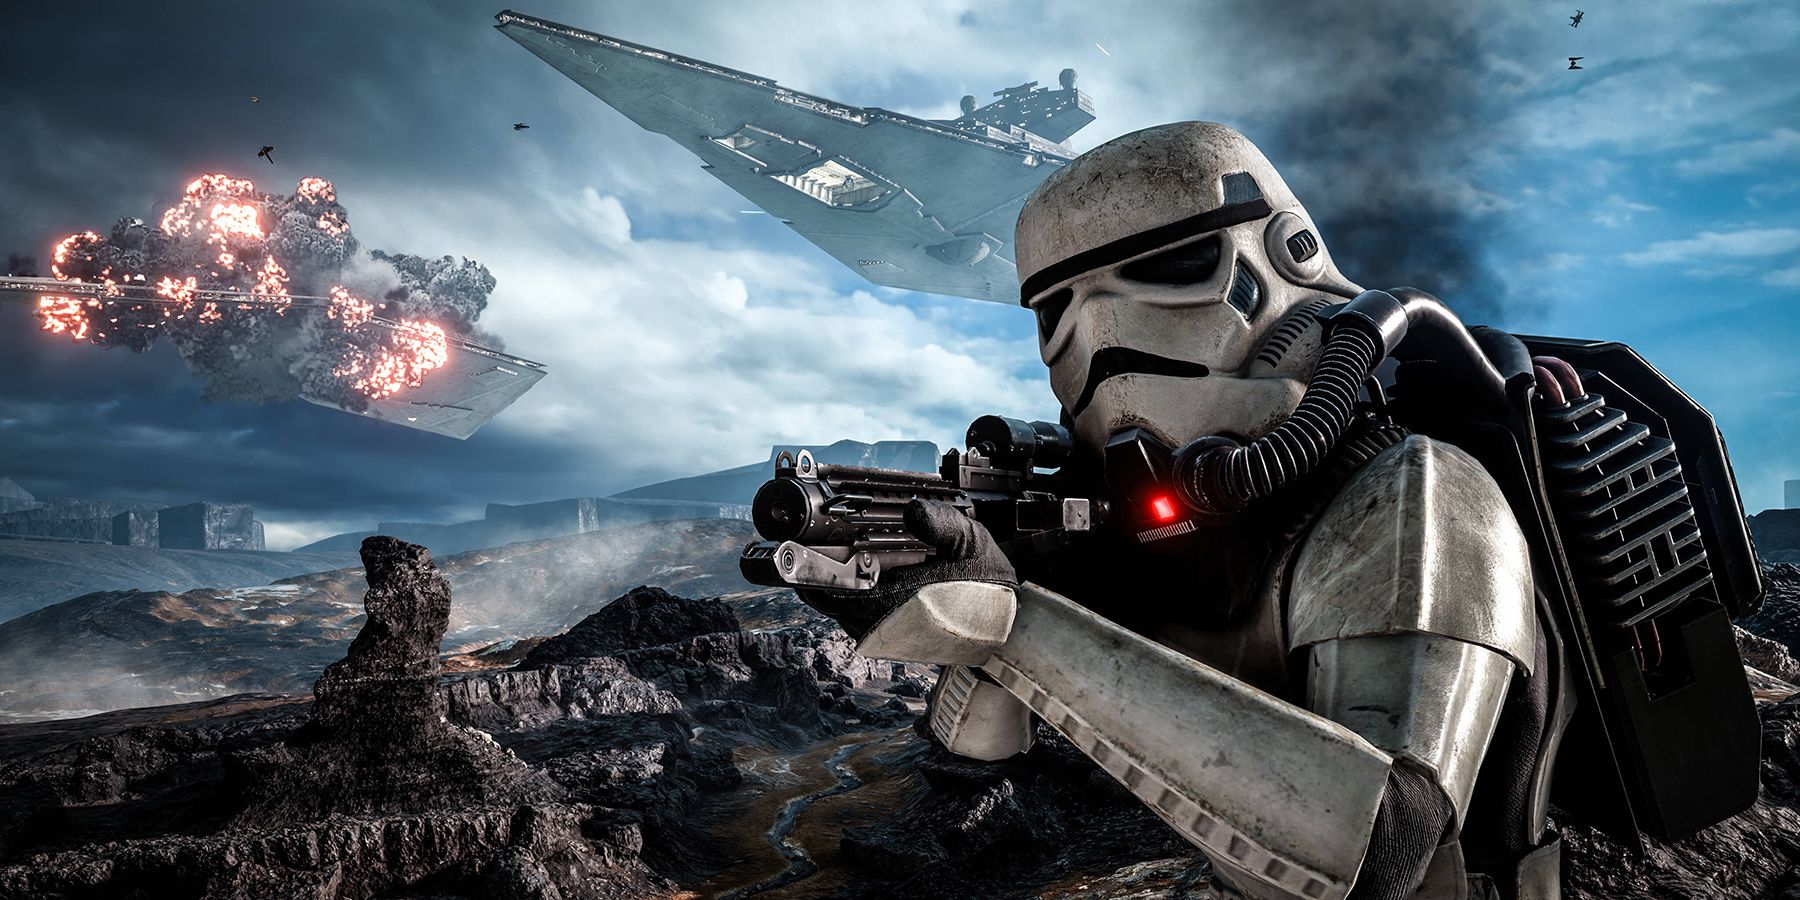 A Storm Trooper shoots through debris in Star Wars Battlefront 2